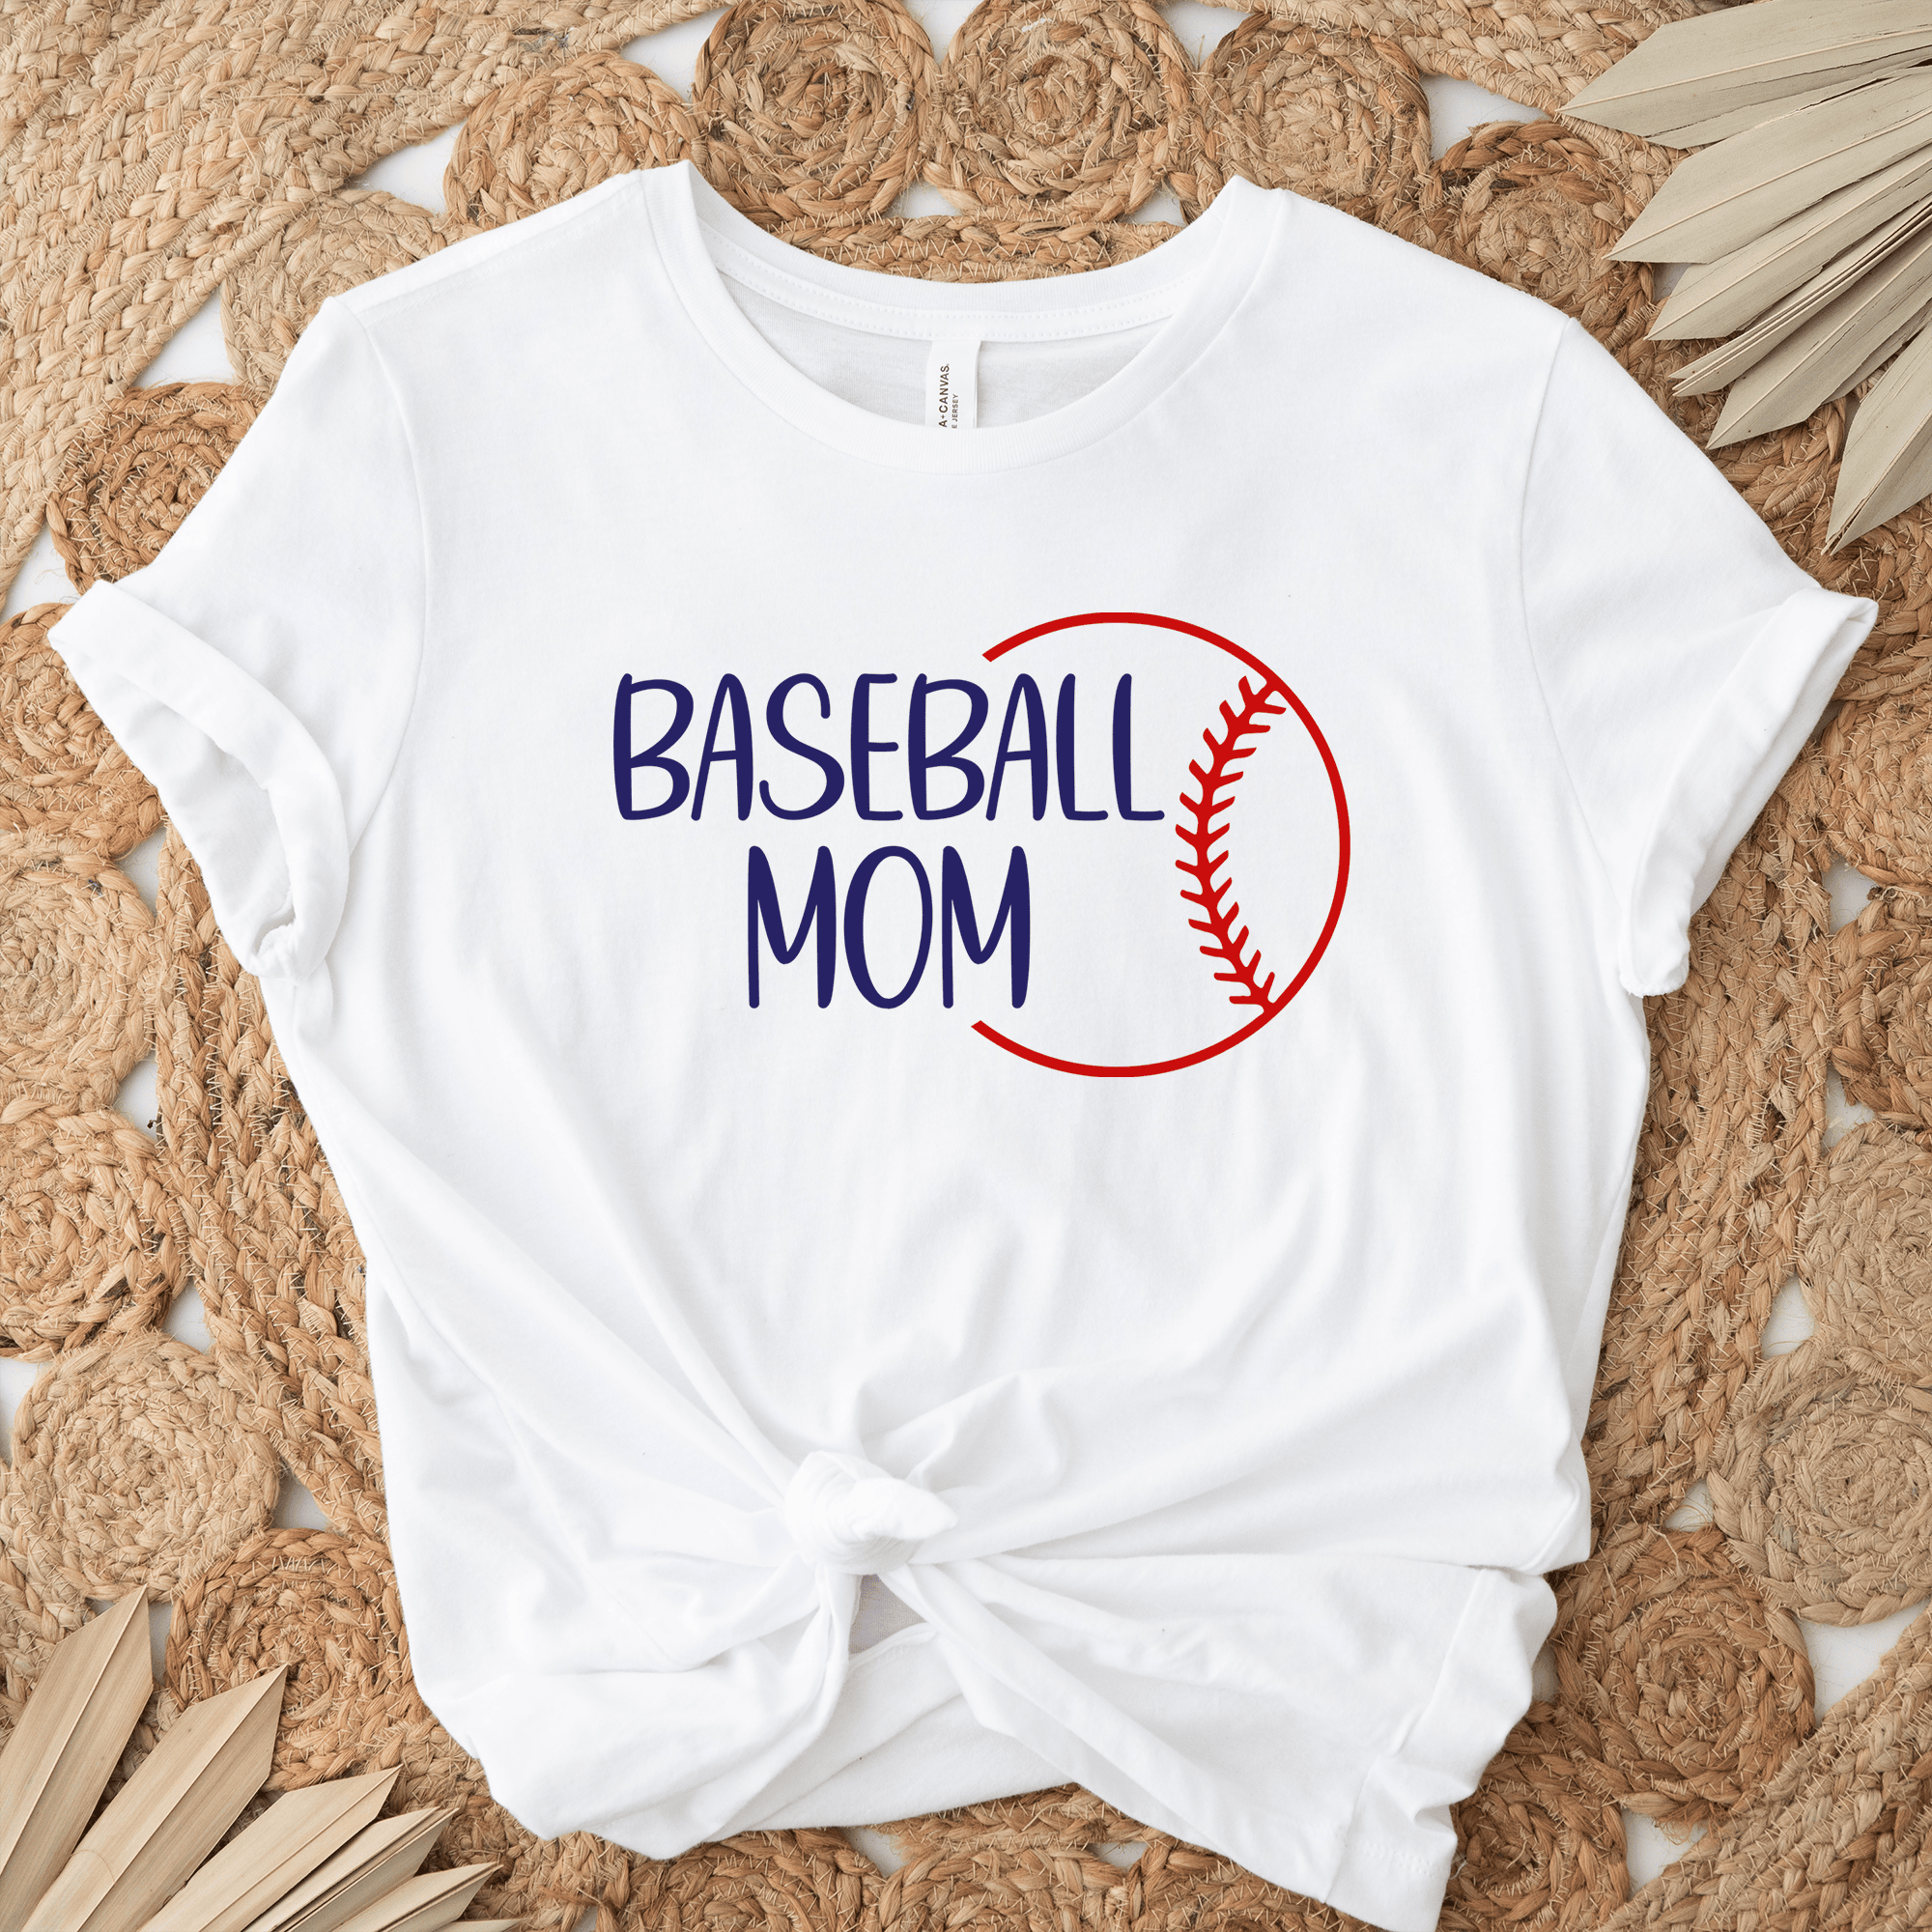 Womens White T Shirt with Sassy-Baseball-Mom design